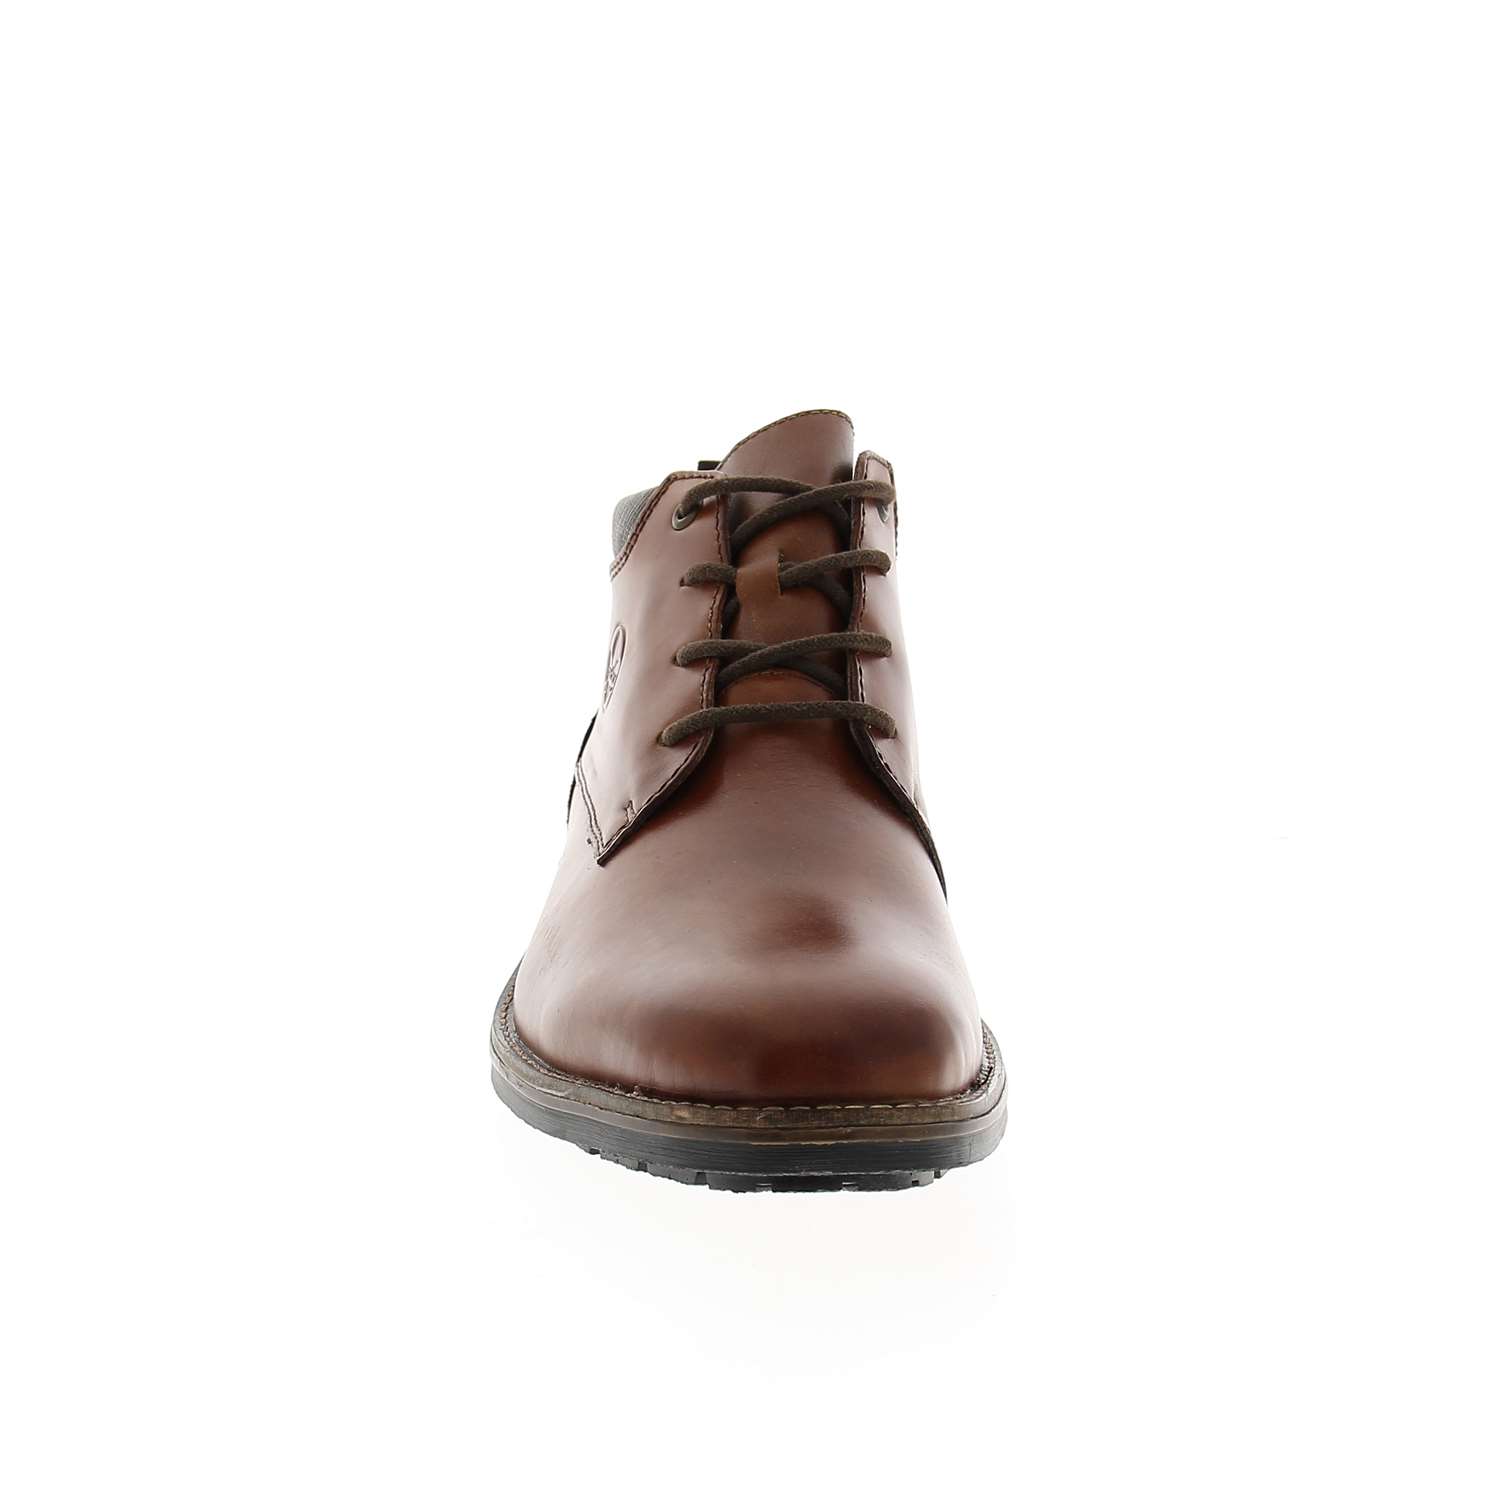 03 - RICOL - RIEKER - Chaussures à lacets - Cuir